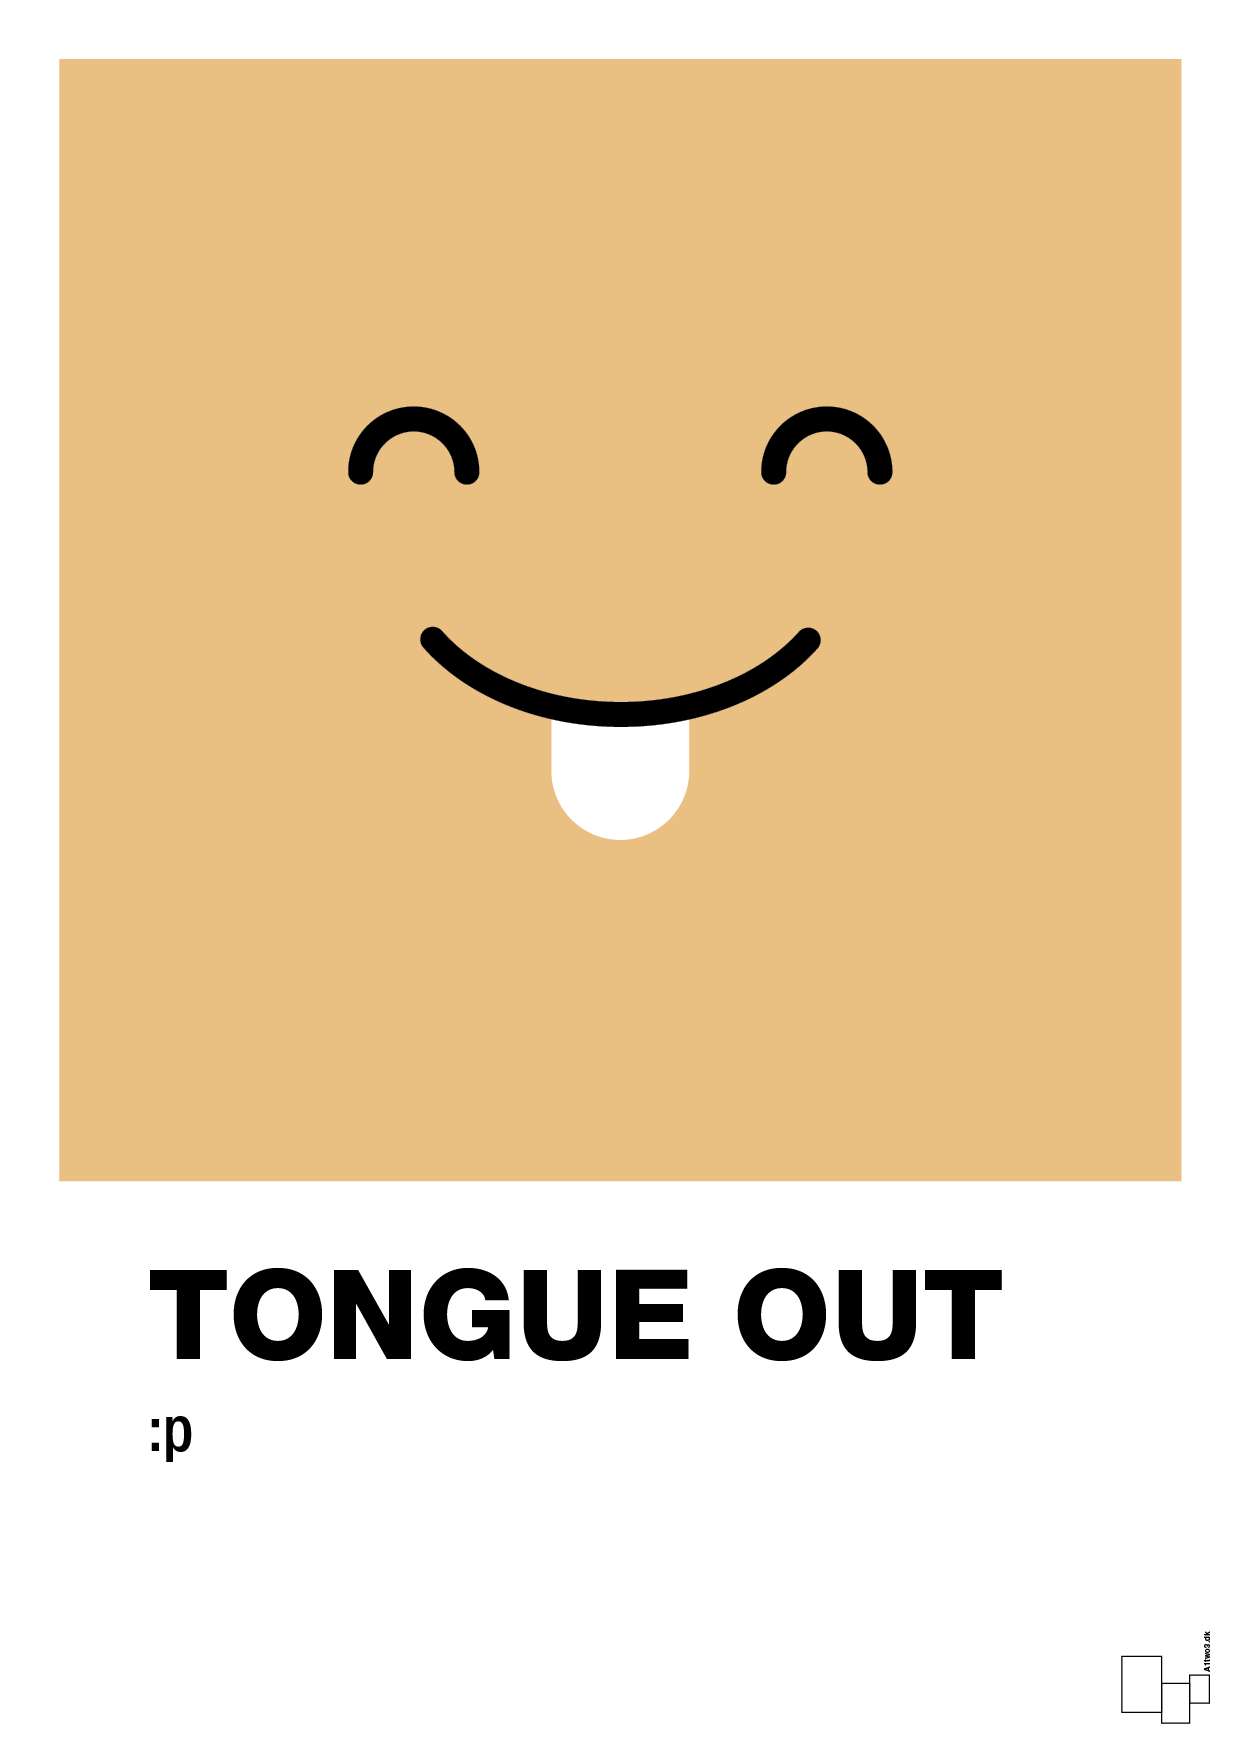 tongue out smiley - Plakat med Grafik i Charismatic